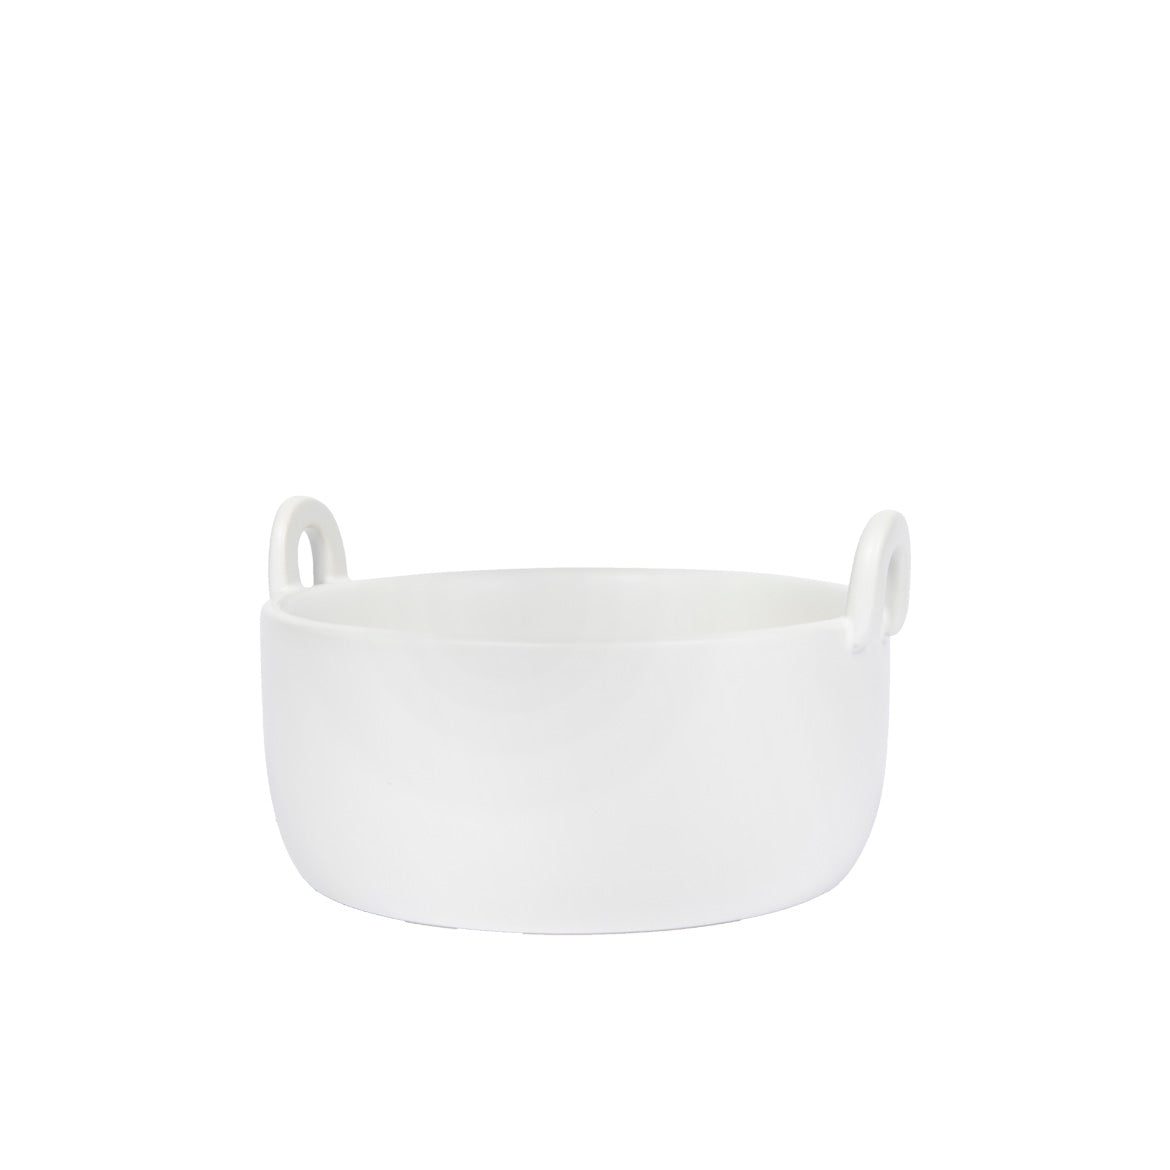 Handle It Ceramic Dog Bowl by Waggo